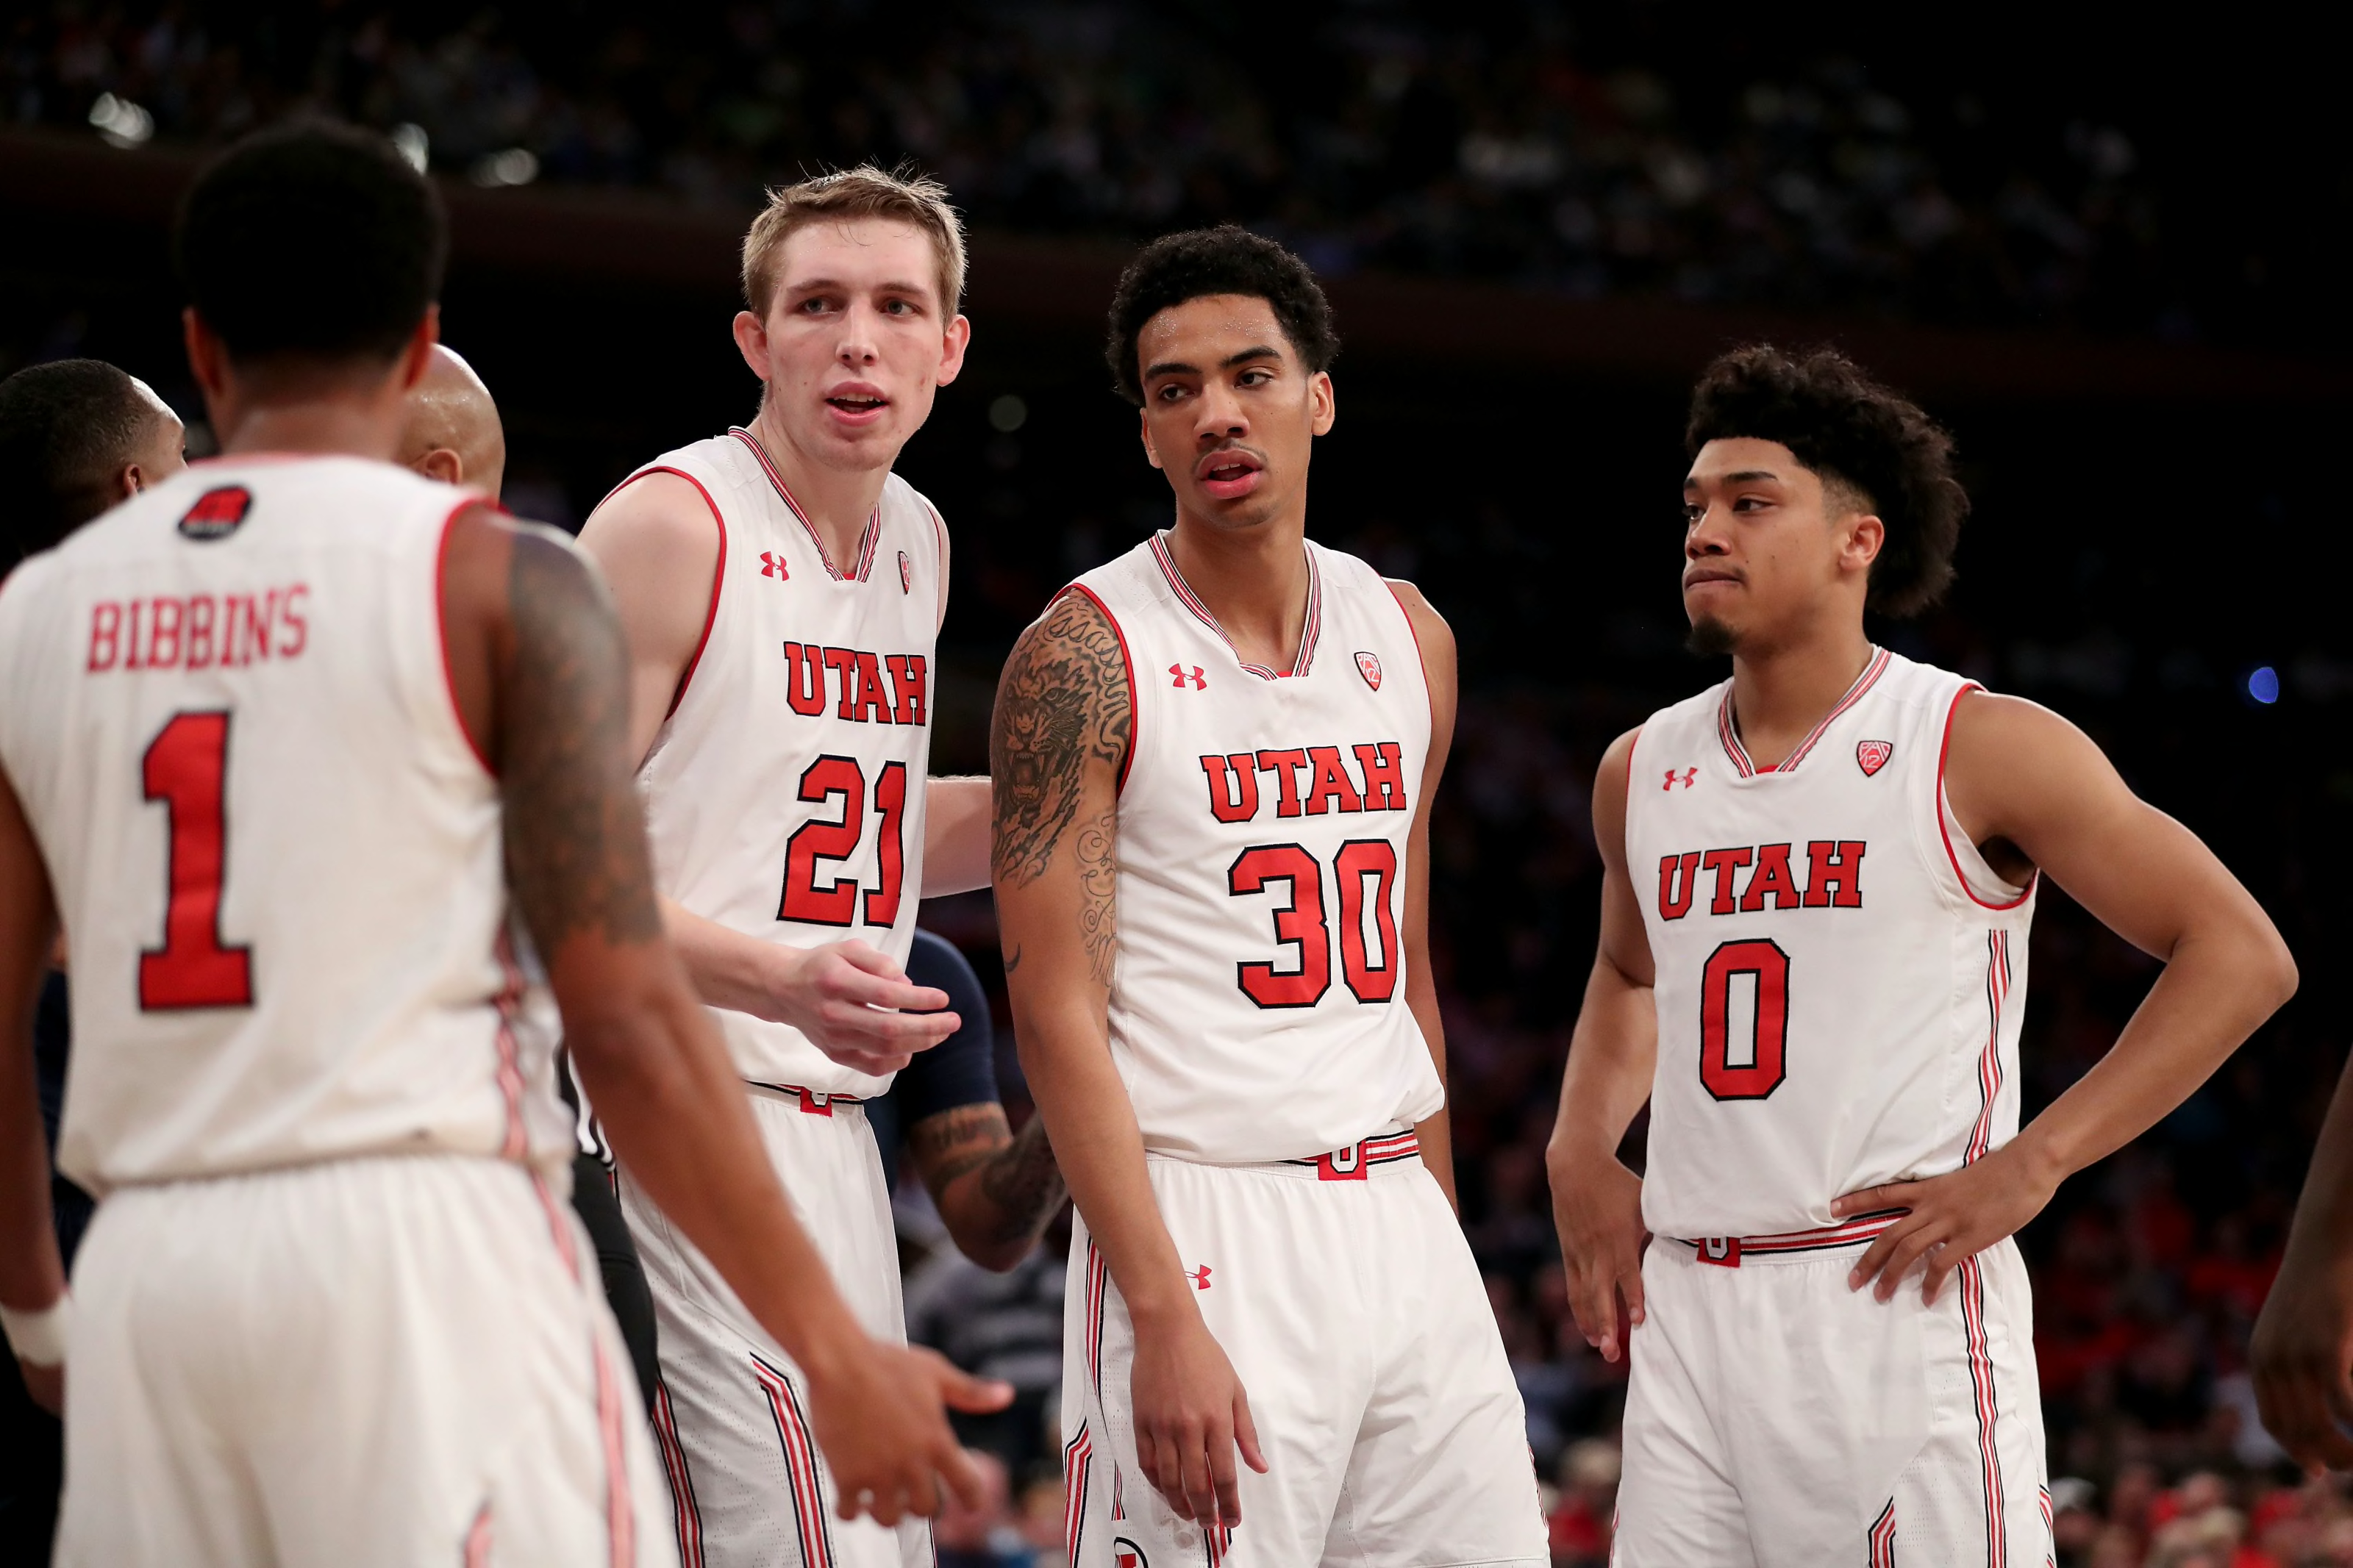 Utah Basketball 201920 season preview for Utes